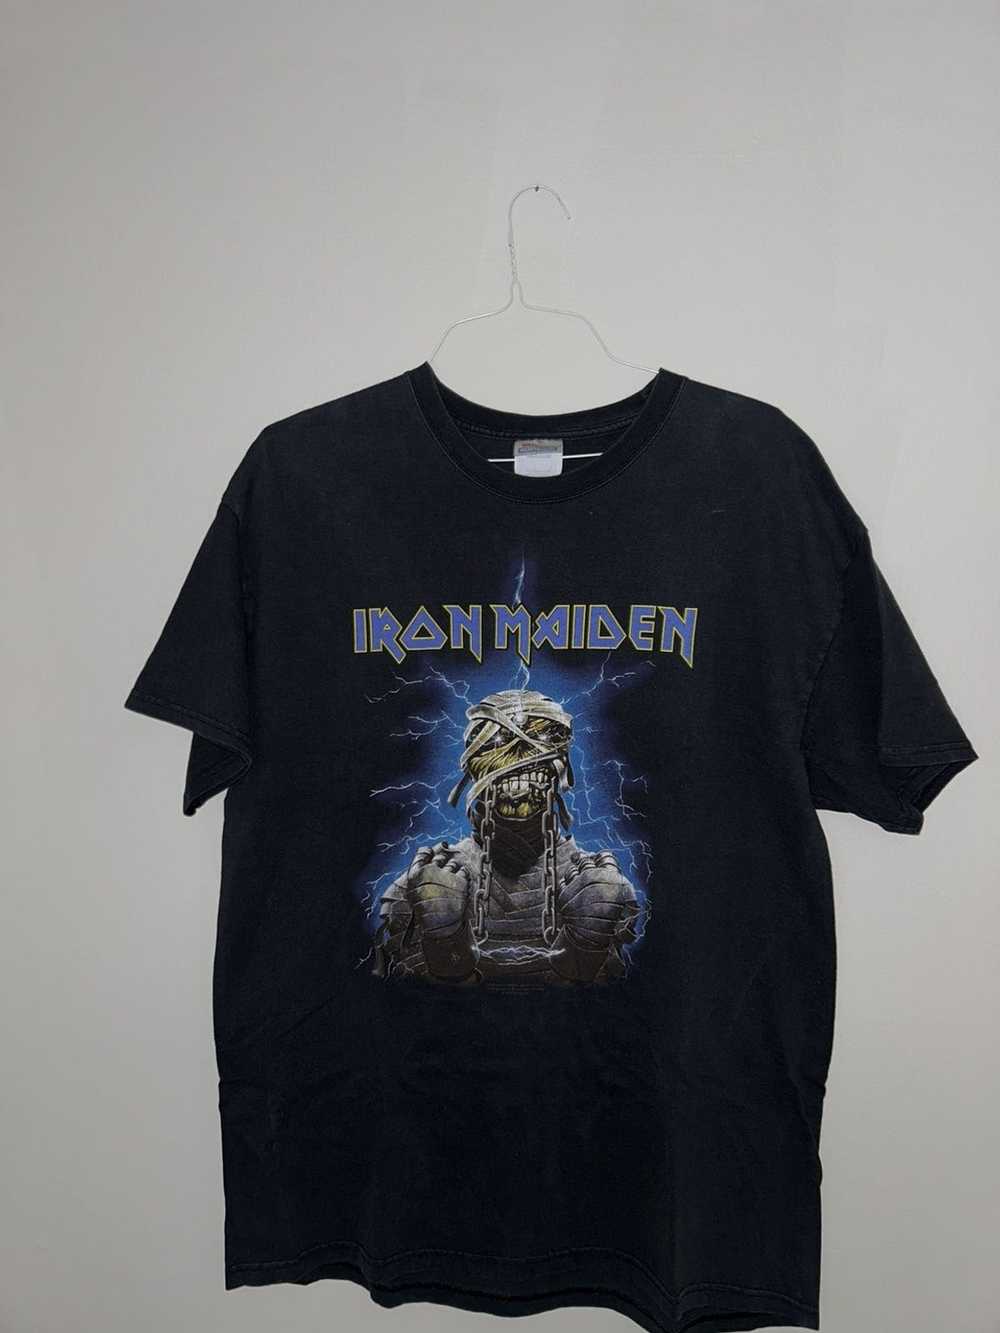 Band Tees × Vintage Vintage Iron Maiden Shirt - image 1